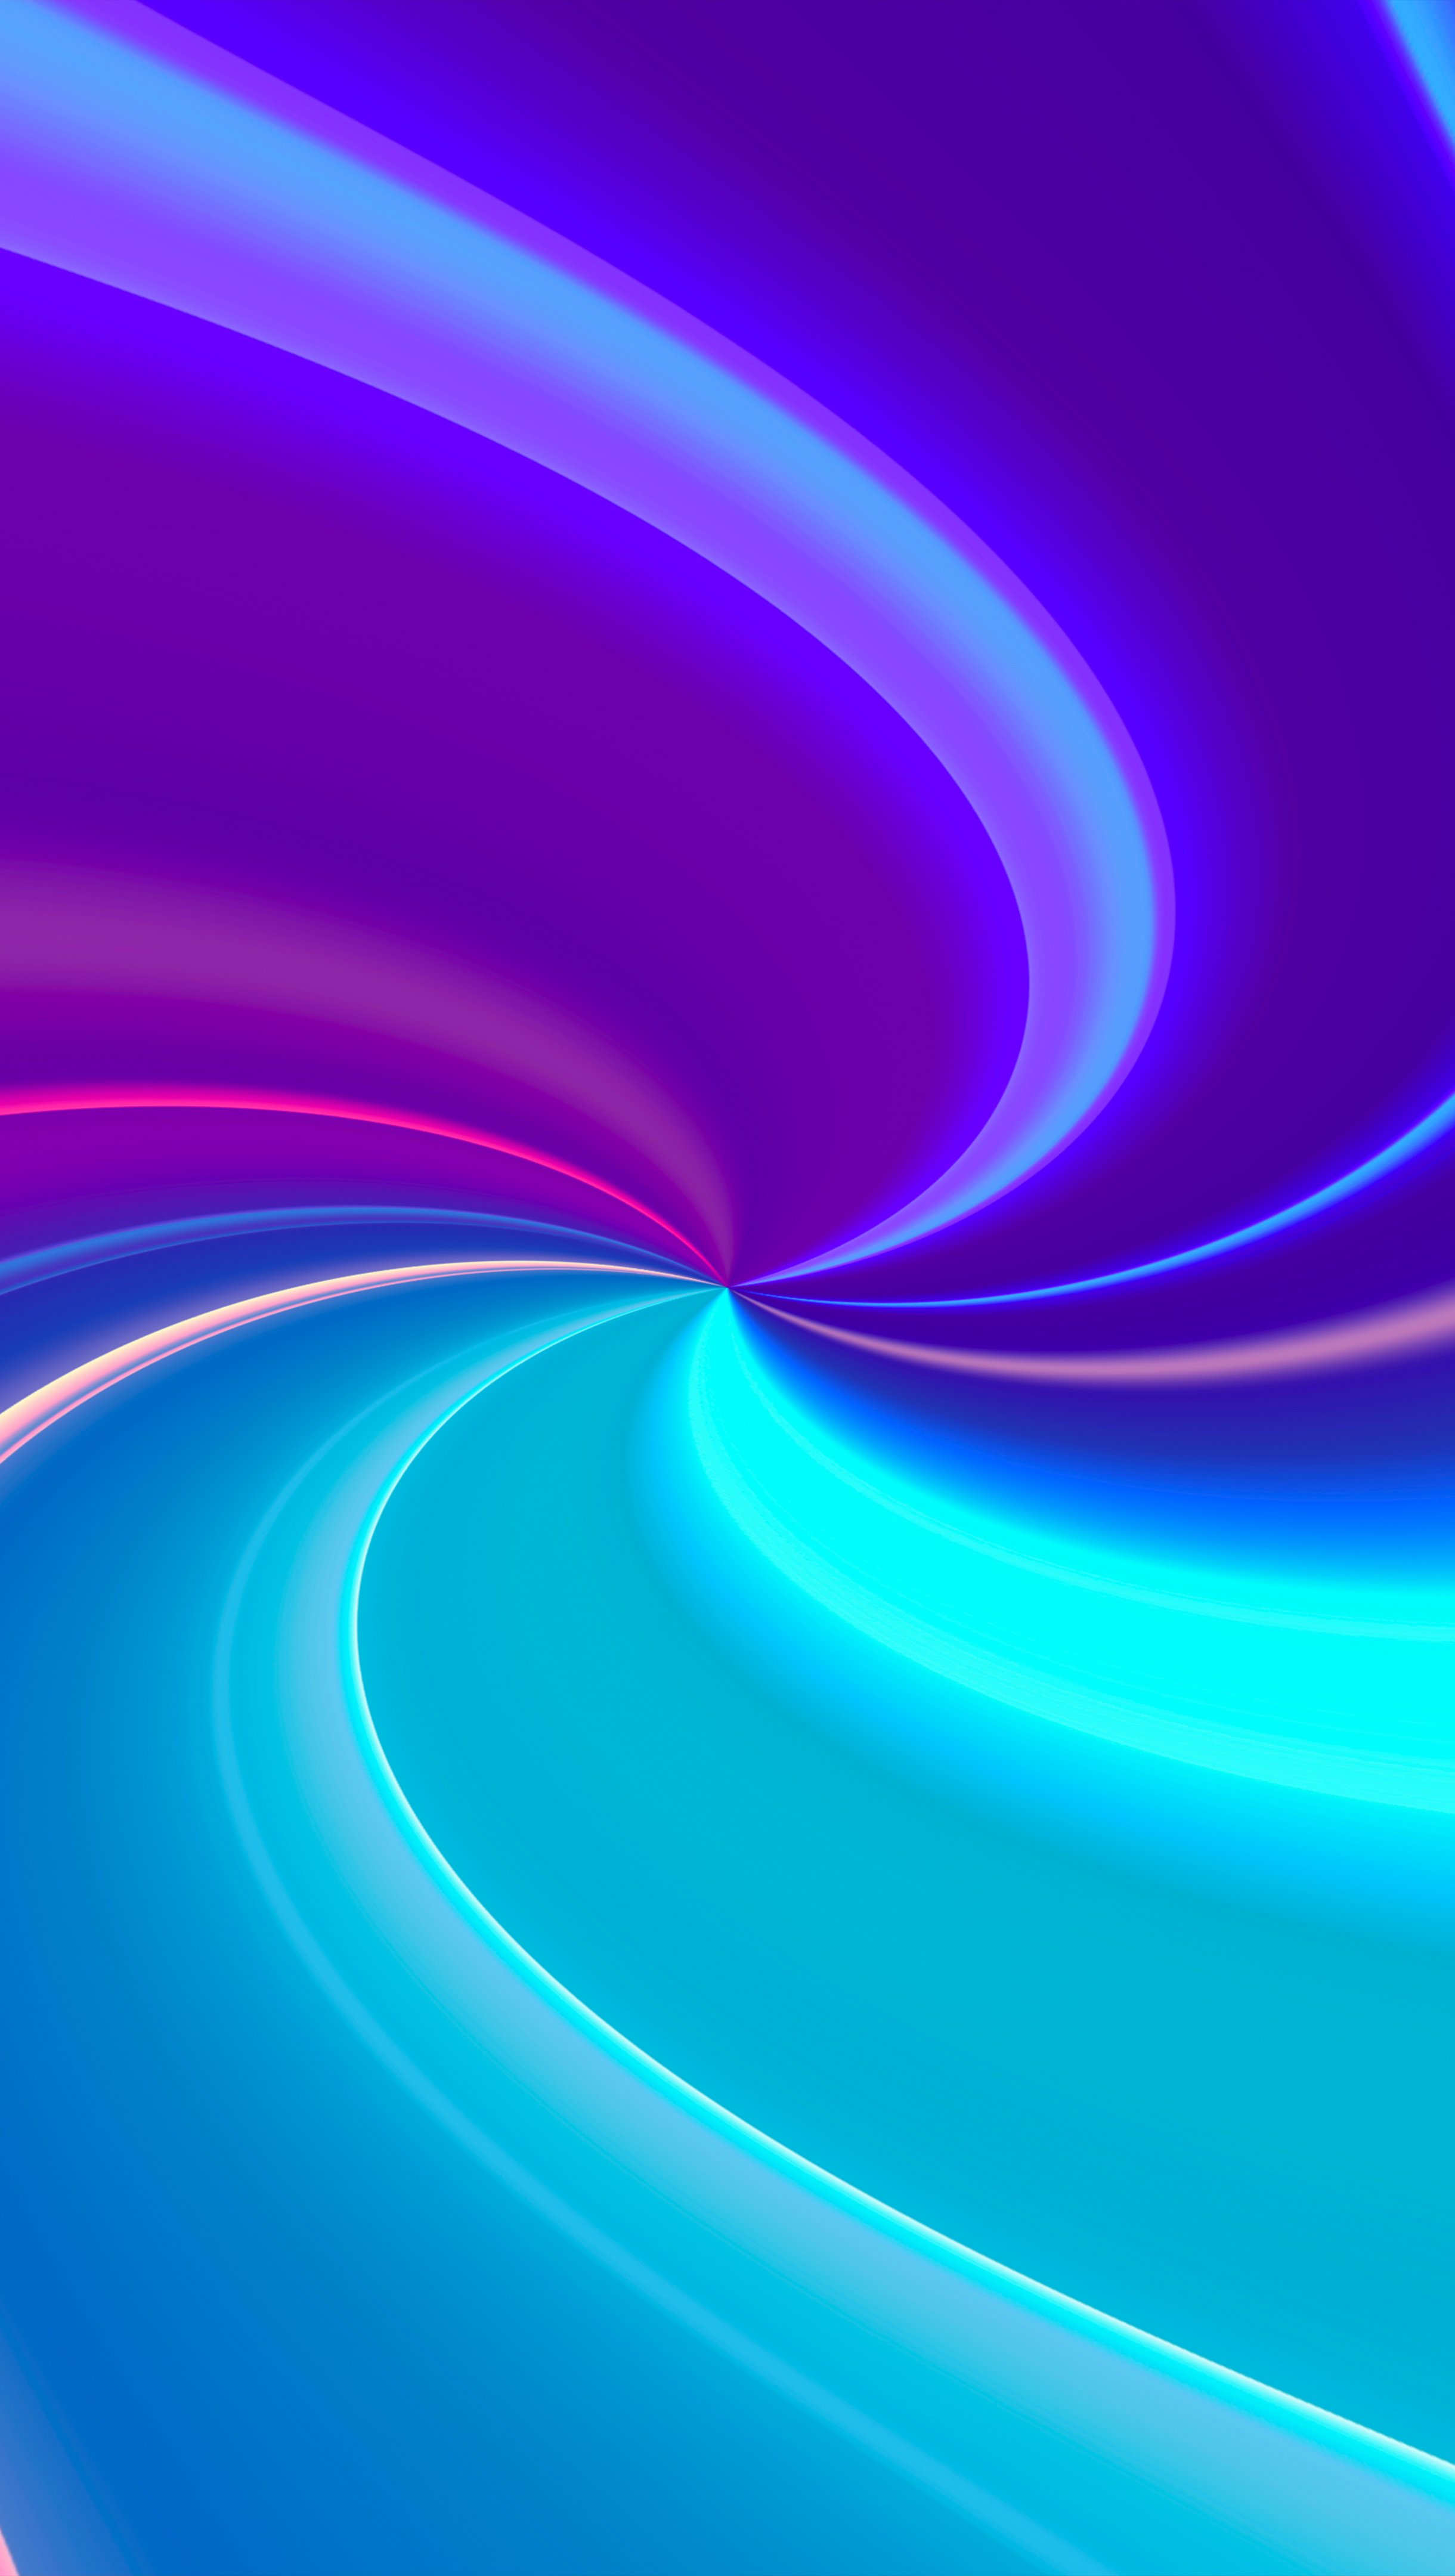 Wallpaper Neon spiral blue and purple Vertical